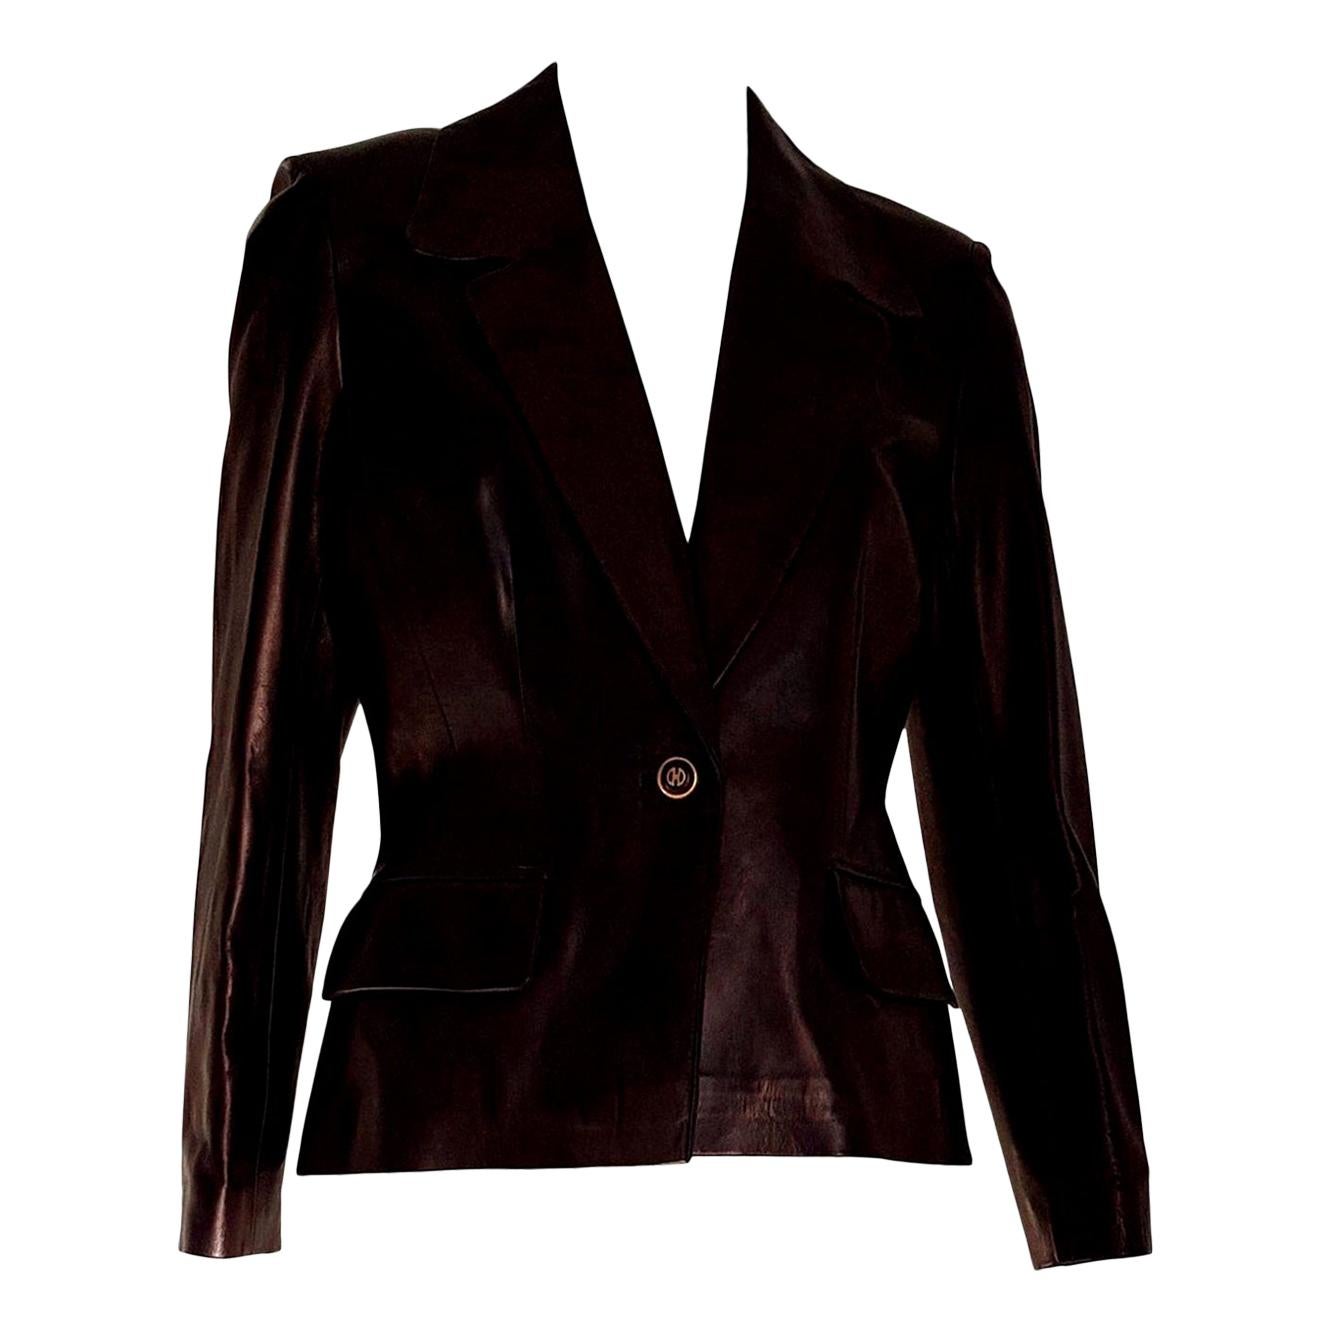 CELINE "New" Black Light Bronze Tone Lambskin Leather Jacket - Unworn For Sale